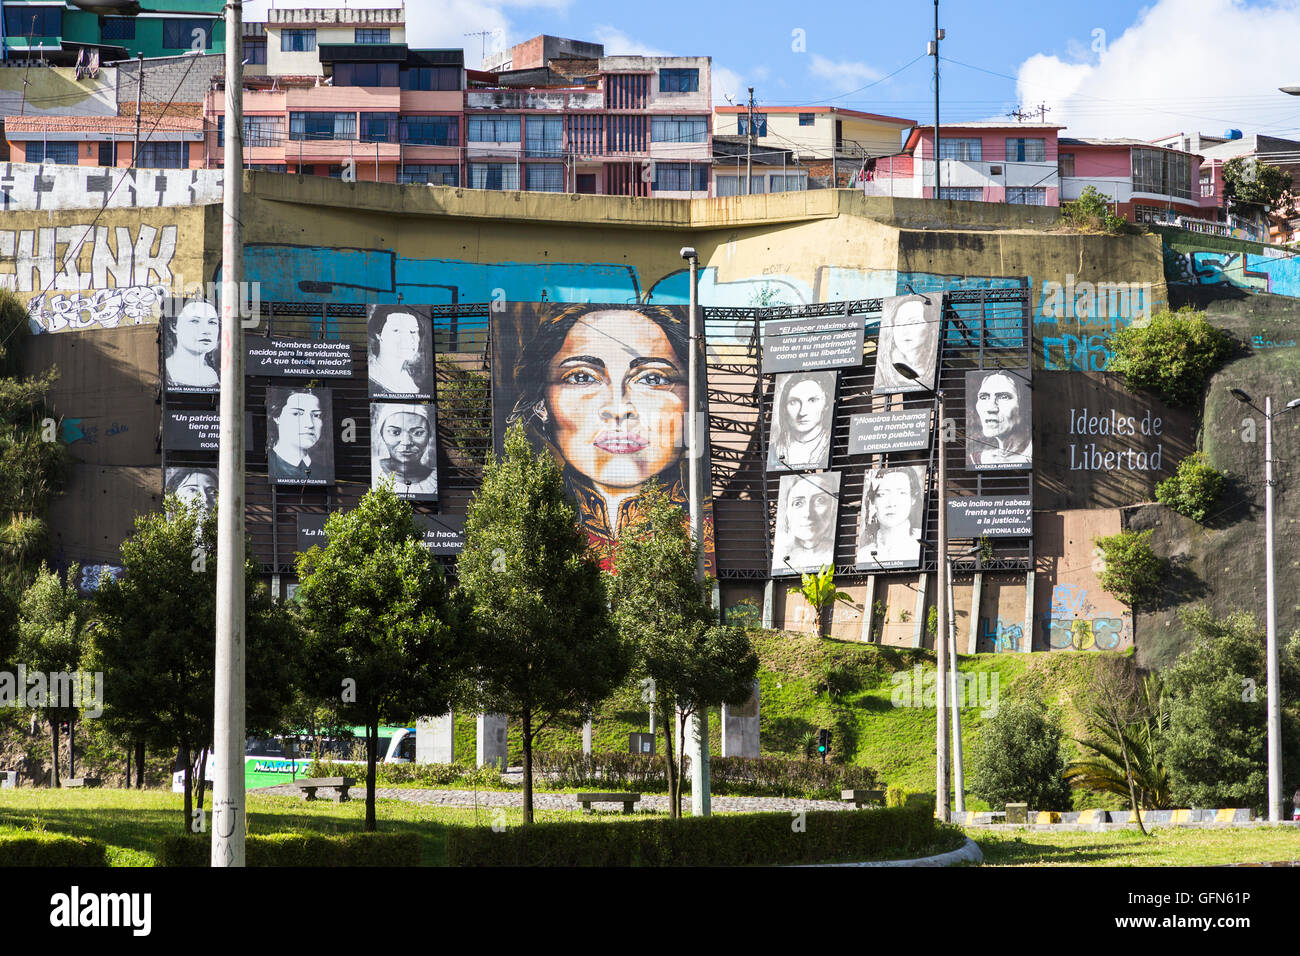 Portraits of women and ideas of liberty, Quito, capital city of Ecuador, South America Stock Photo